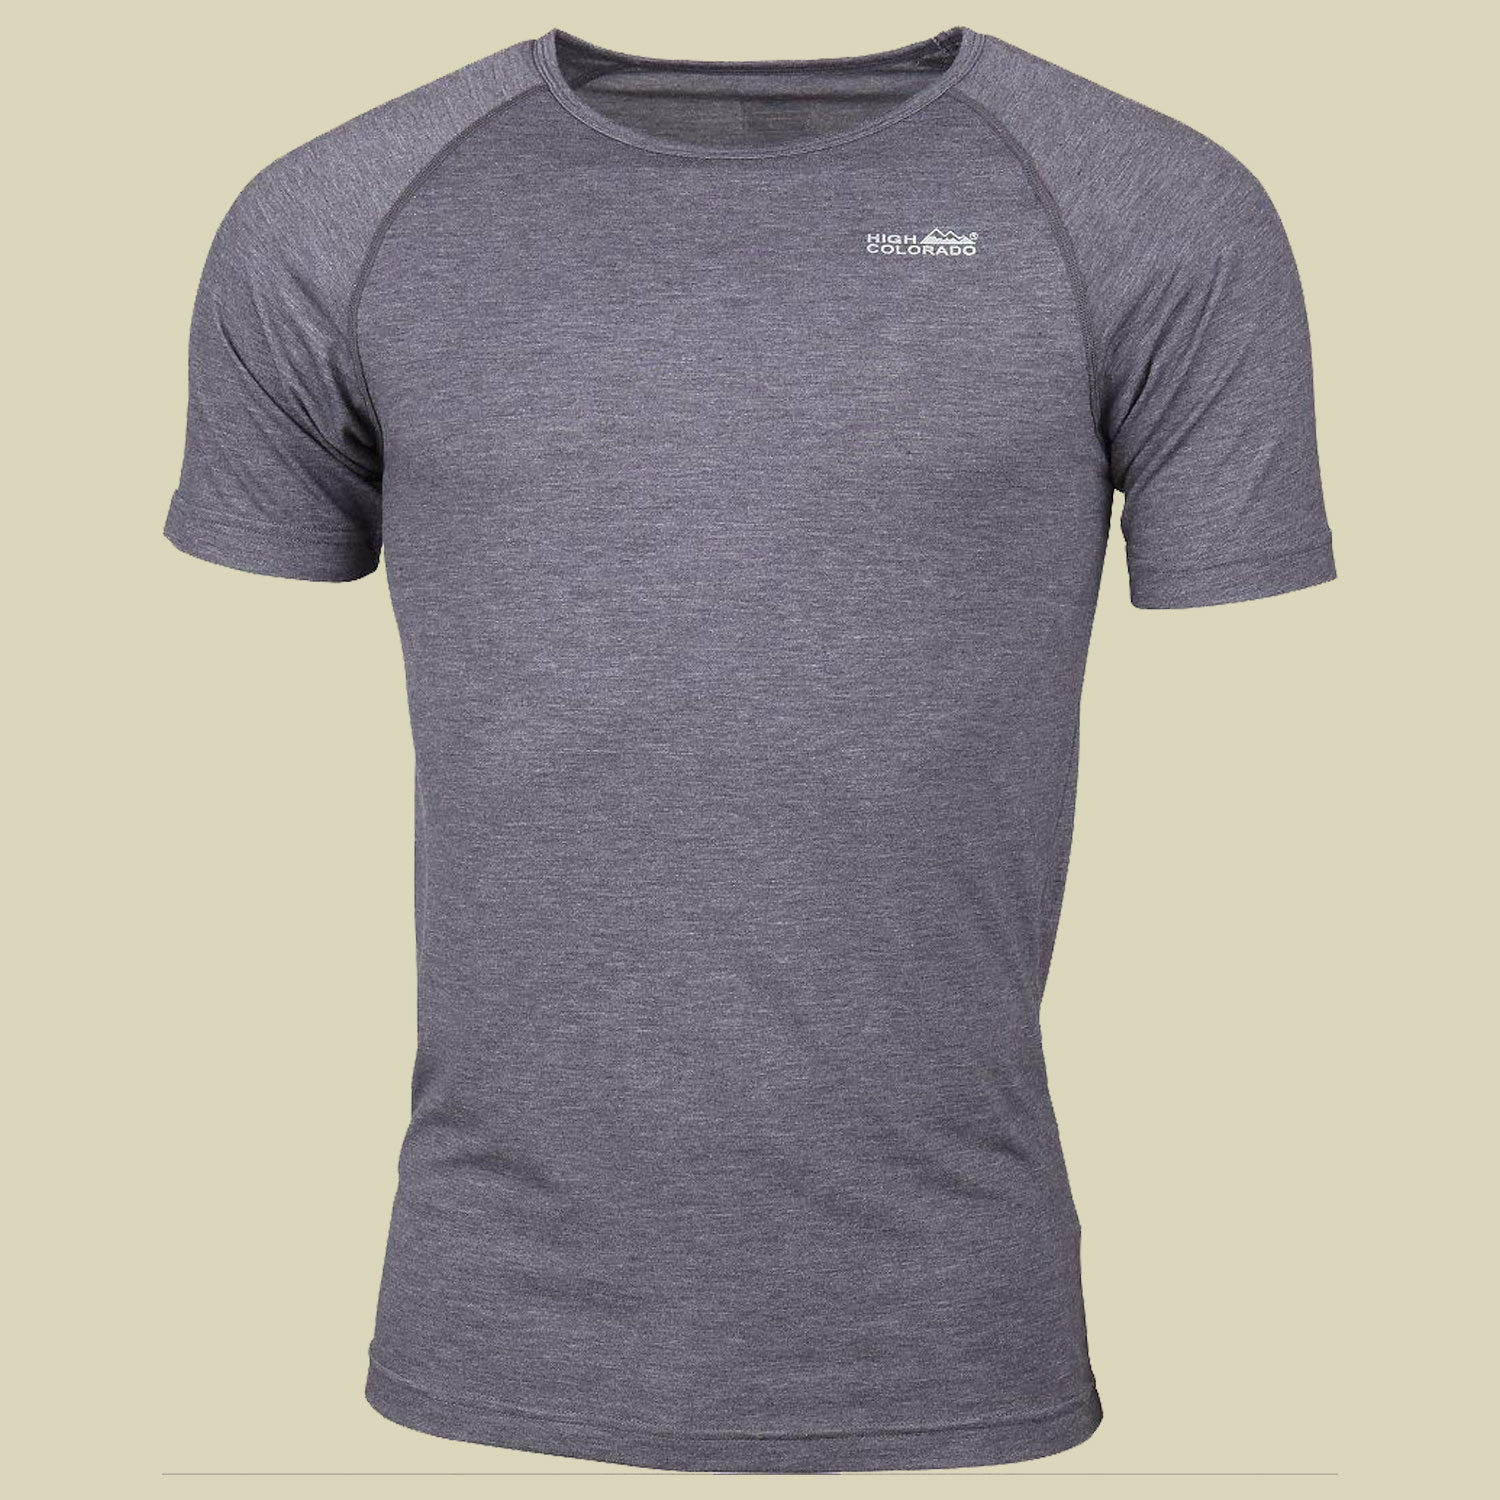 Bergen ½ Arm-Shirt Men Größe L  Farbe 7004 anthrazit melange